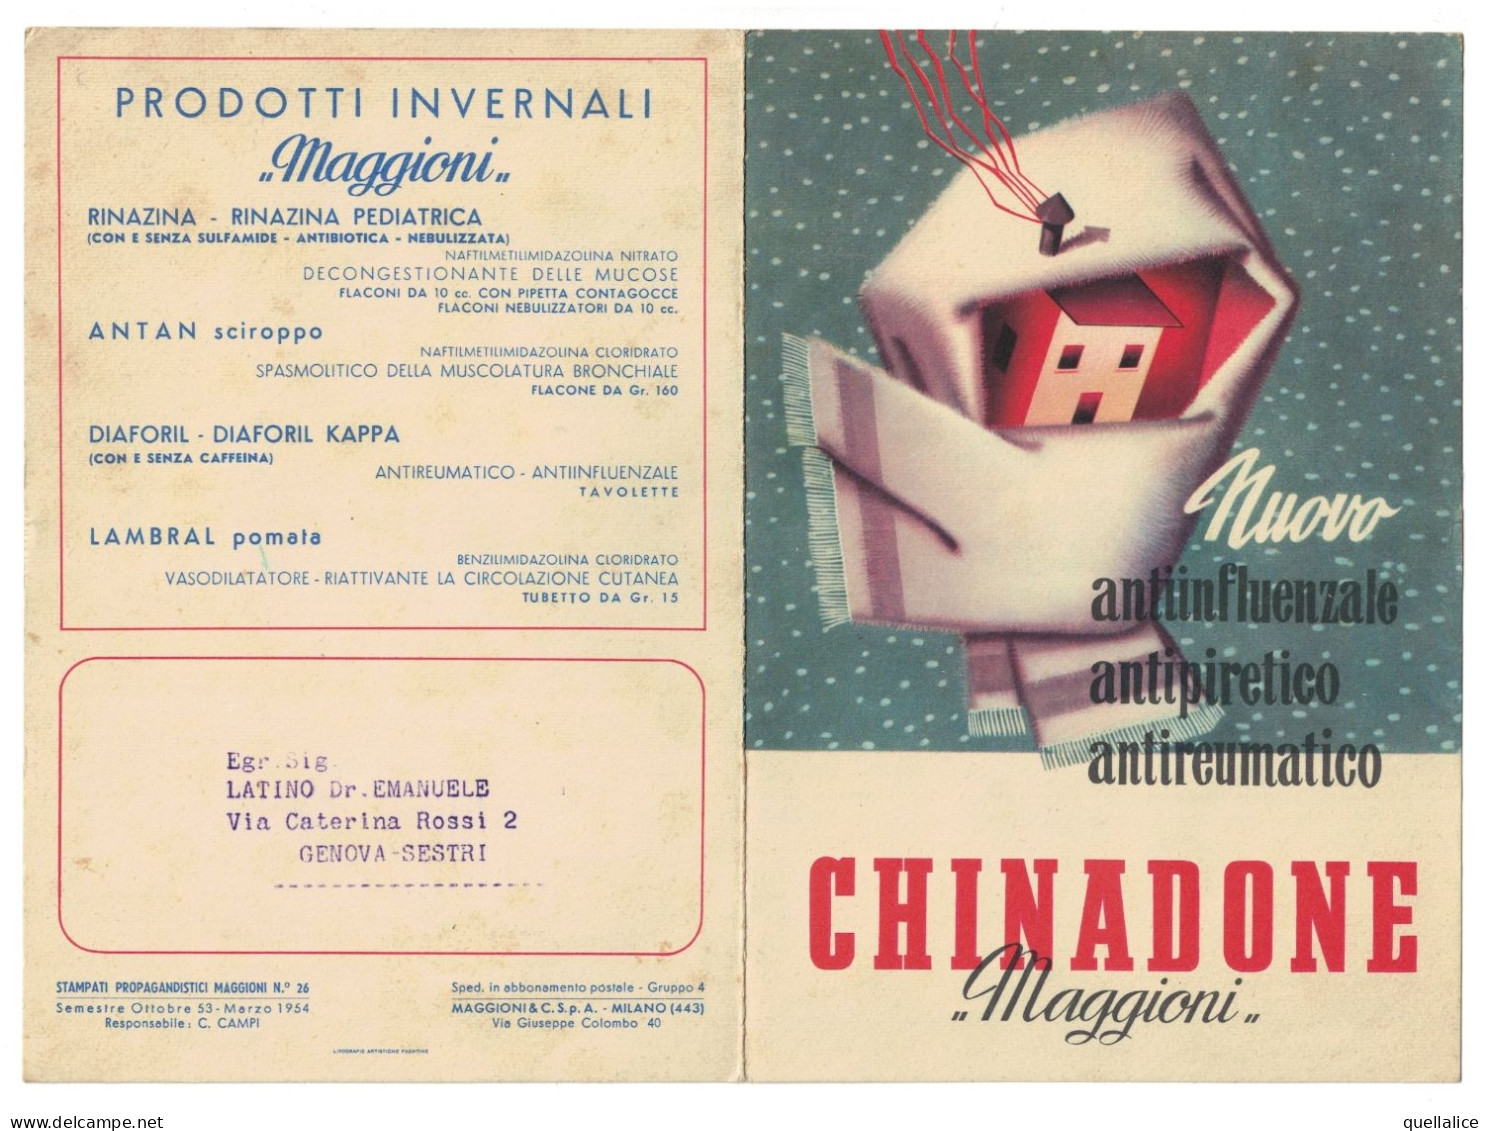 03916 "CHINADONE - MAGGIONI & C. S.PA. - NUOVO ANTIINFLUENZALE, ANTIPIRETICO, ANTIREUMATICO" PUBBL. 1954 - Publicidad